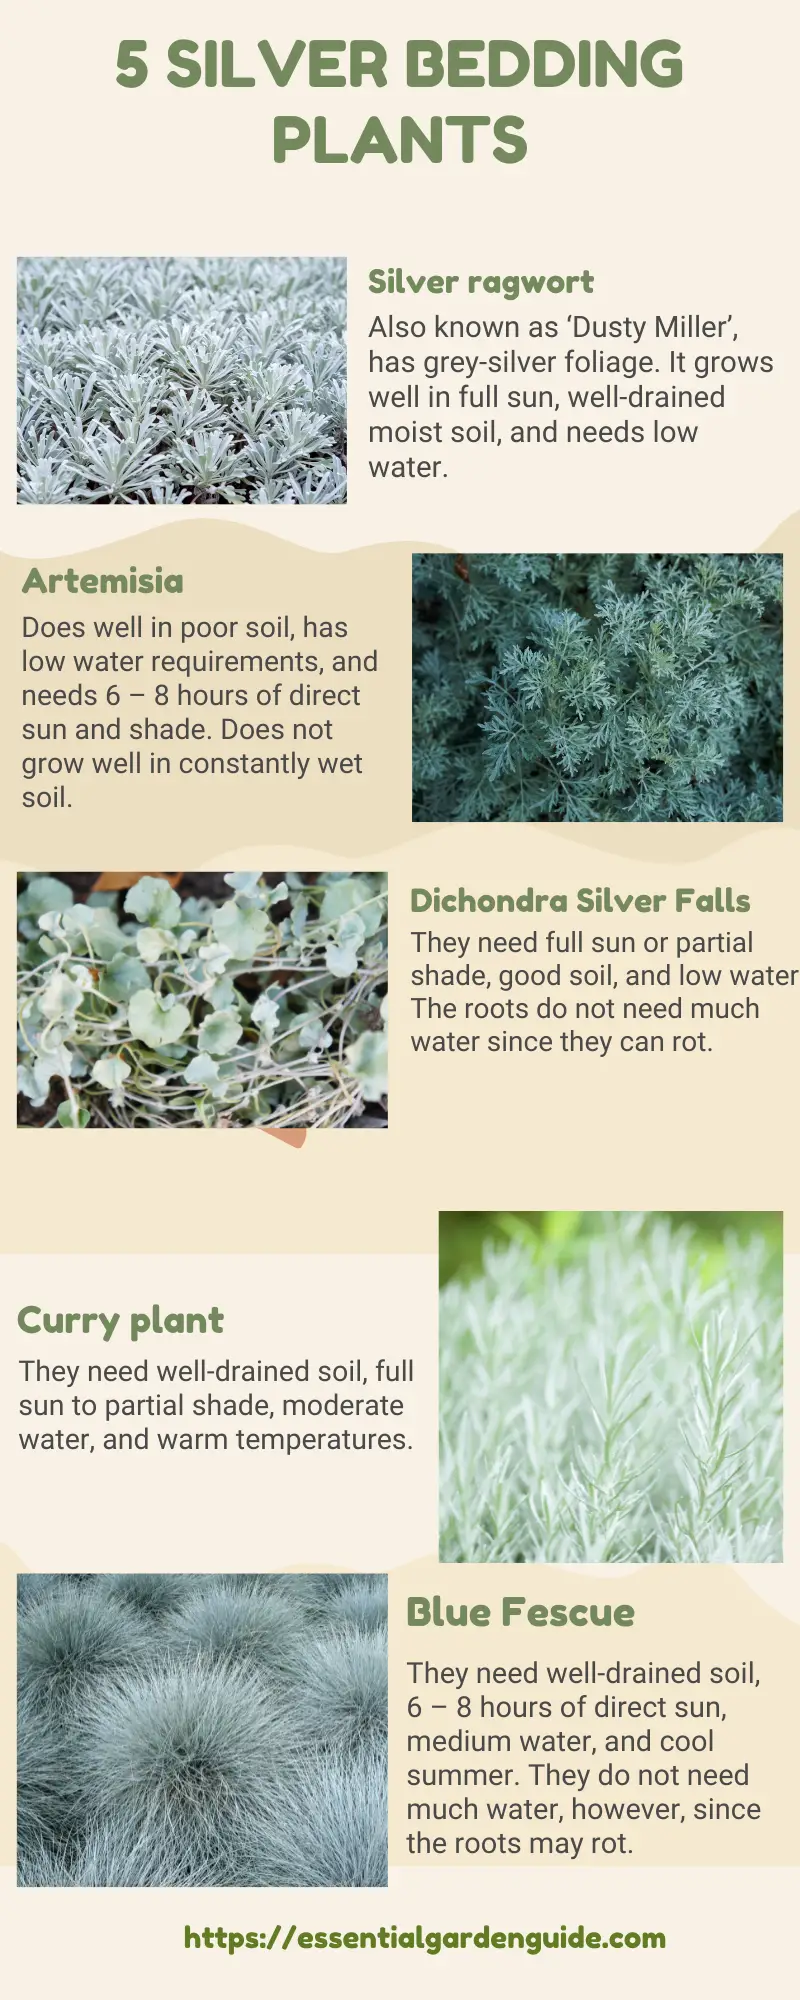 5 Silver Bedding Plants